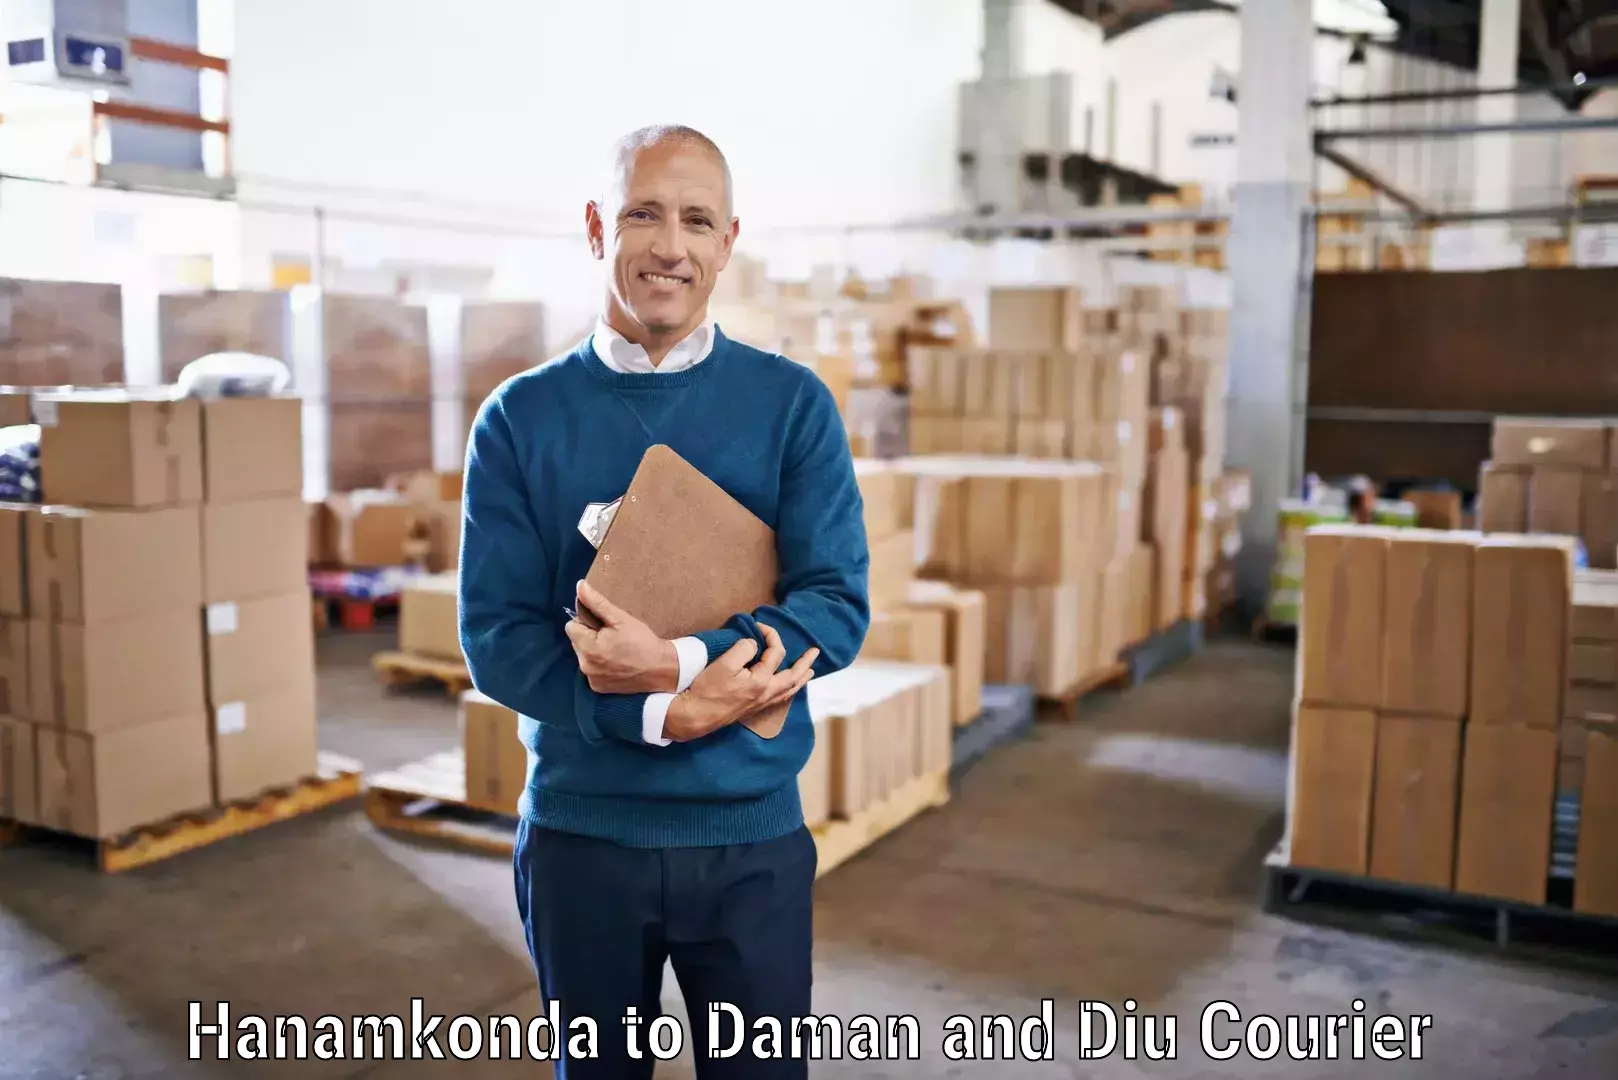 User-friendly delivery service Hanamkonda to Daman and Diu